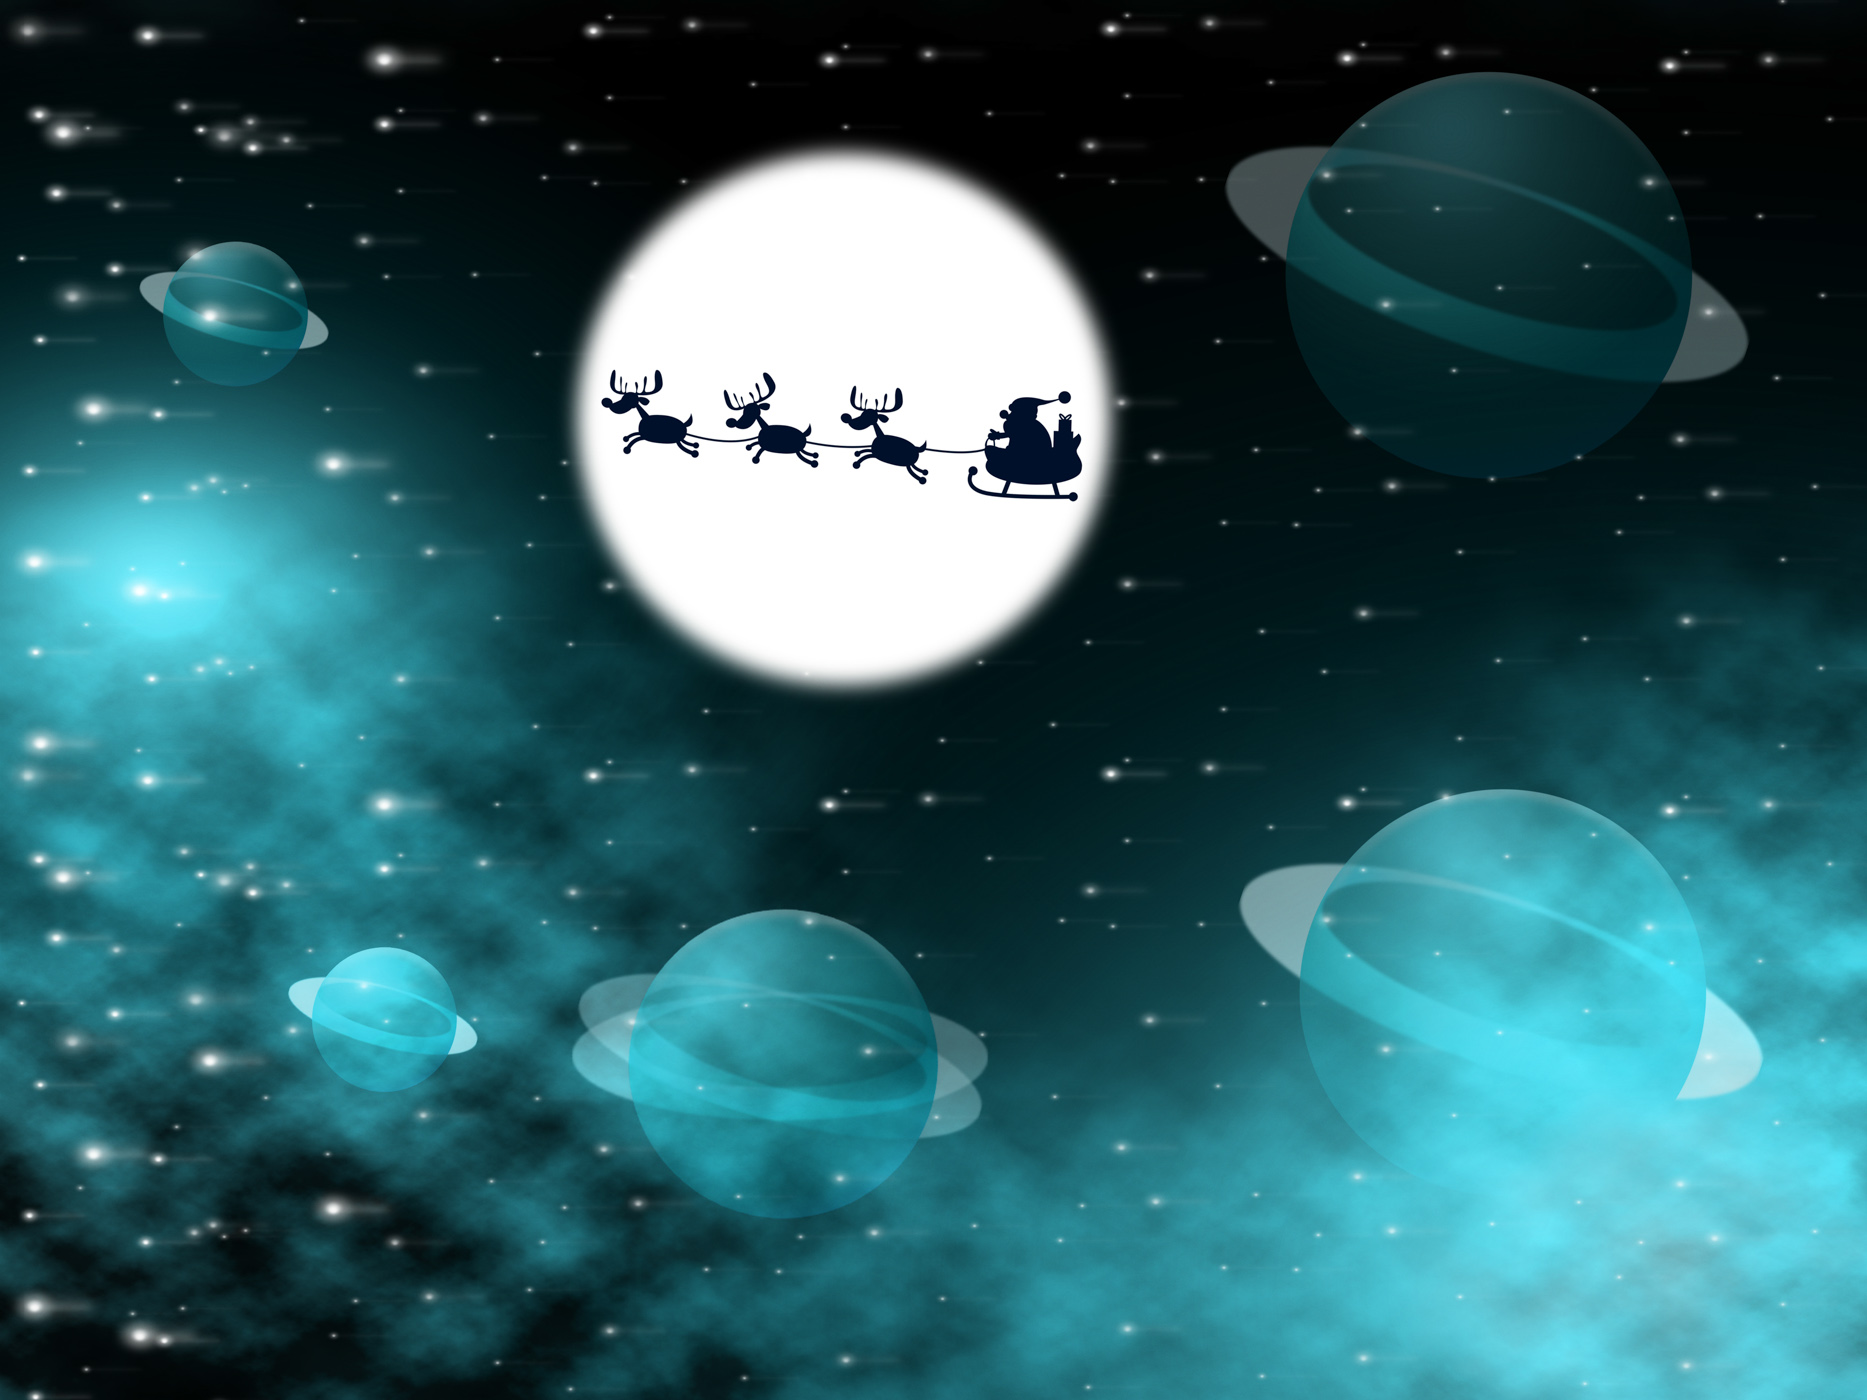 Xmas  Shows Full Moon And Christmastime, Astronomy, Moon, X-mas, Winter, HQ Photo